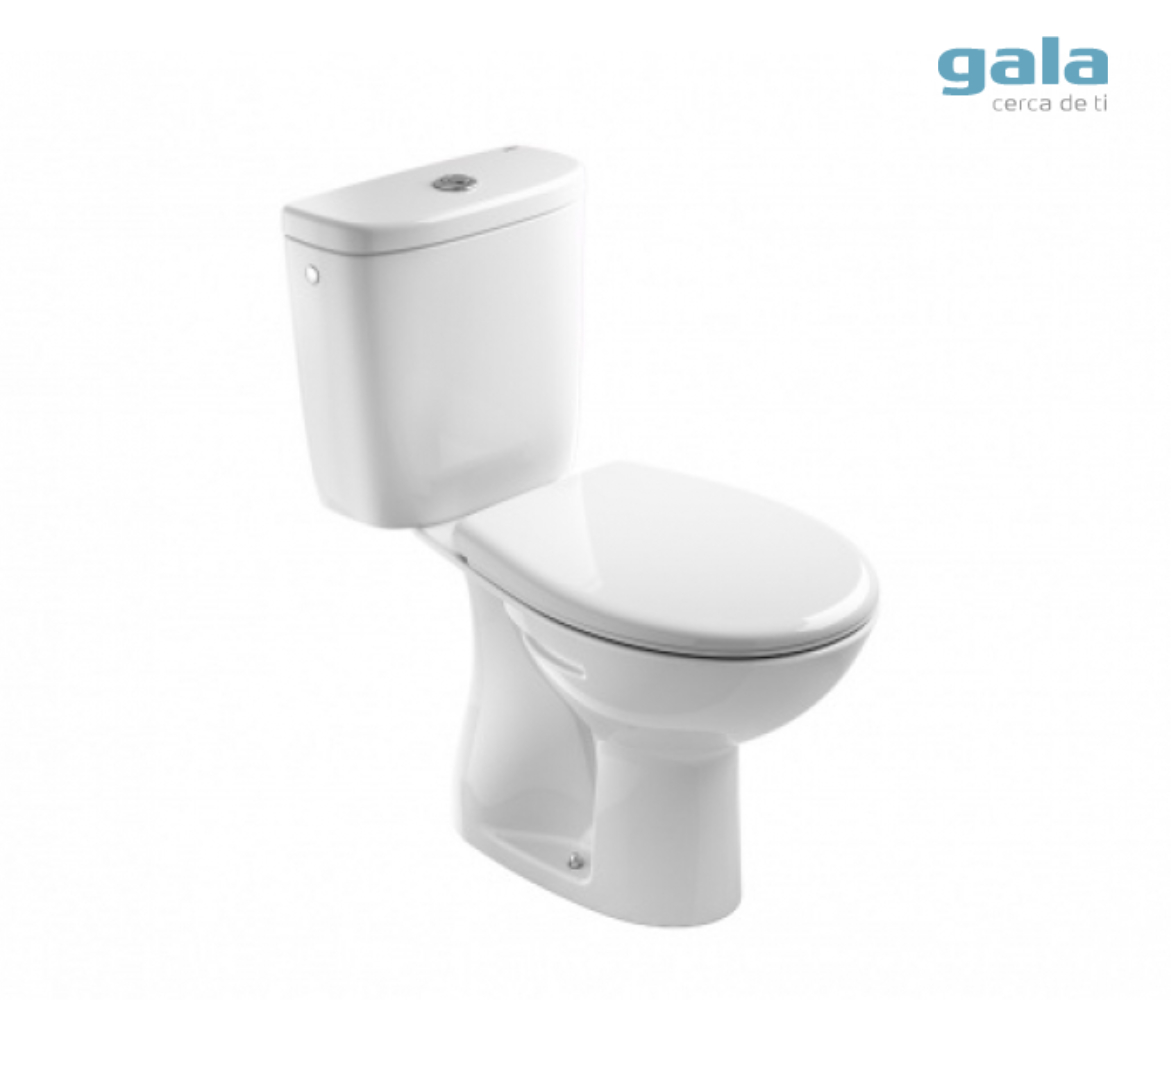 Gala WC Modelo LIZZ Blanco con cisterna baja